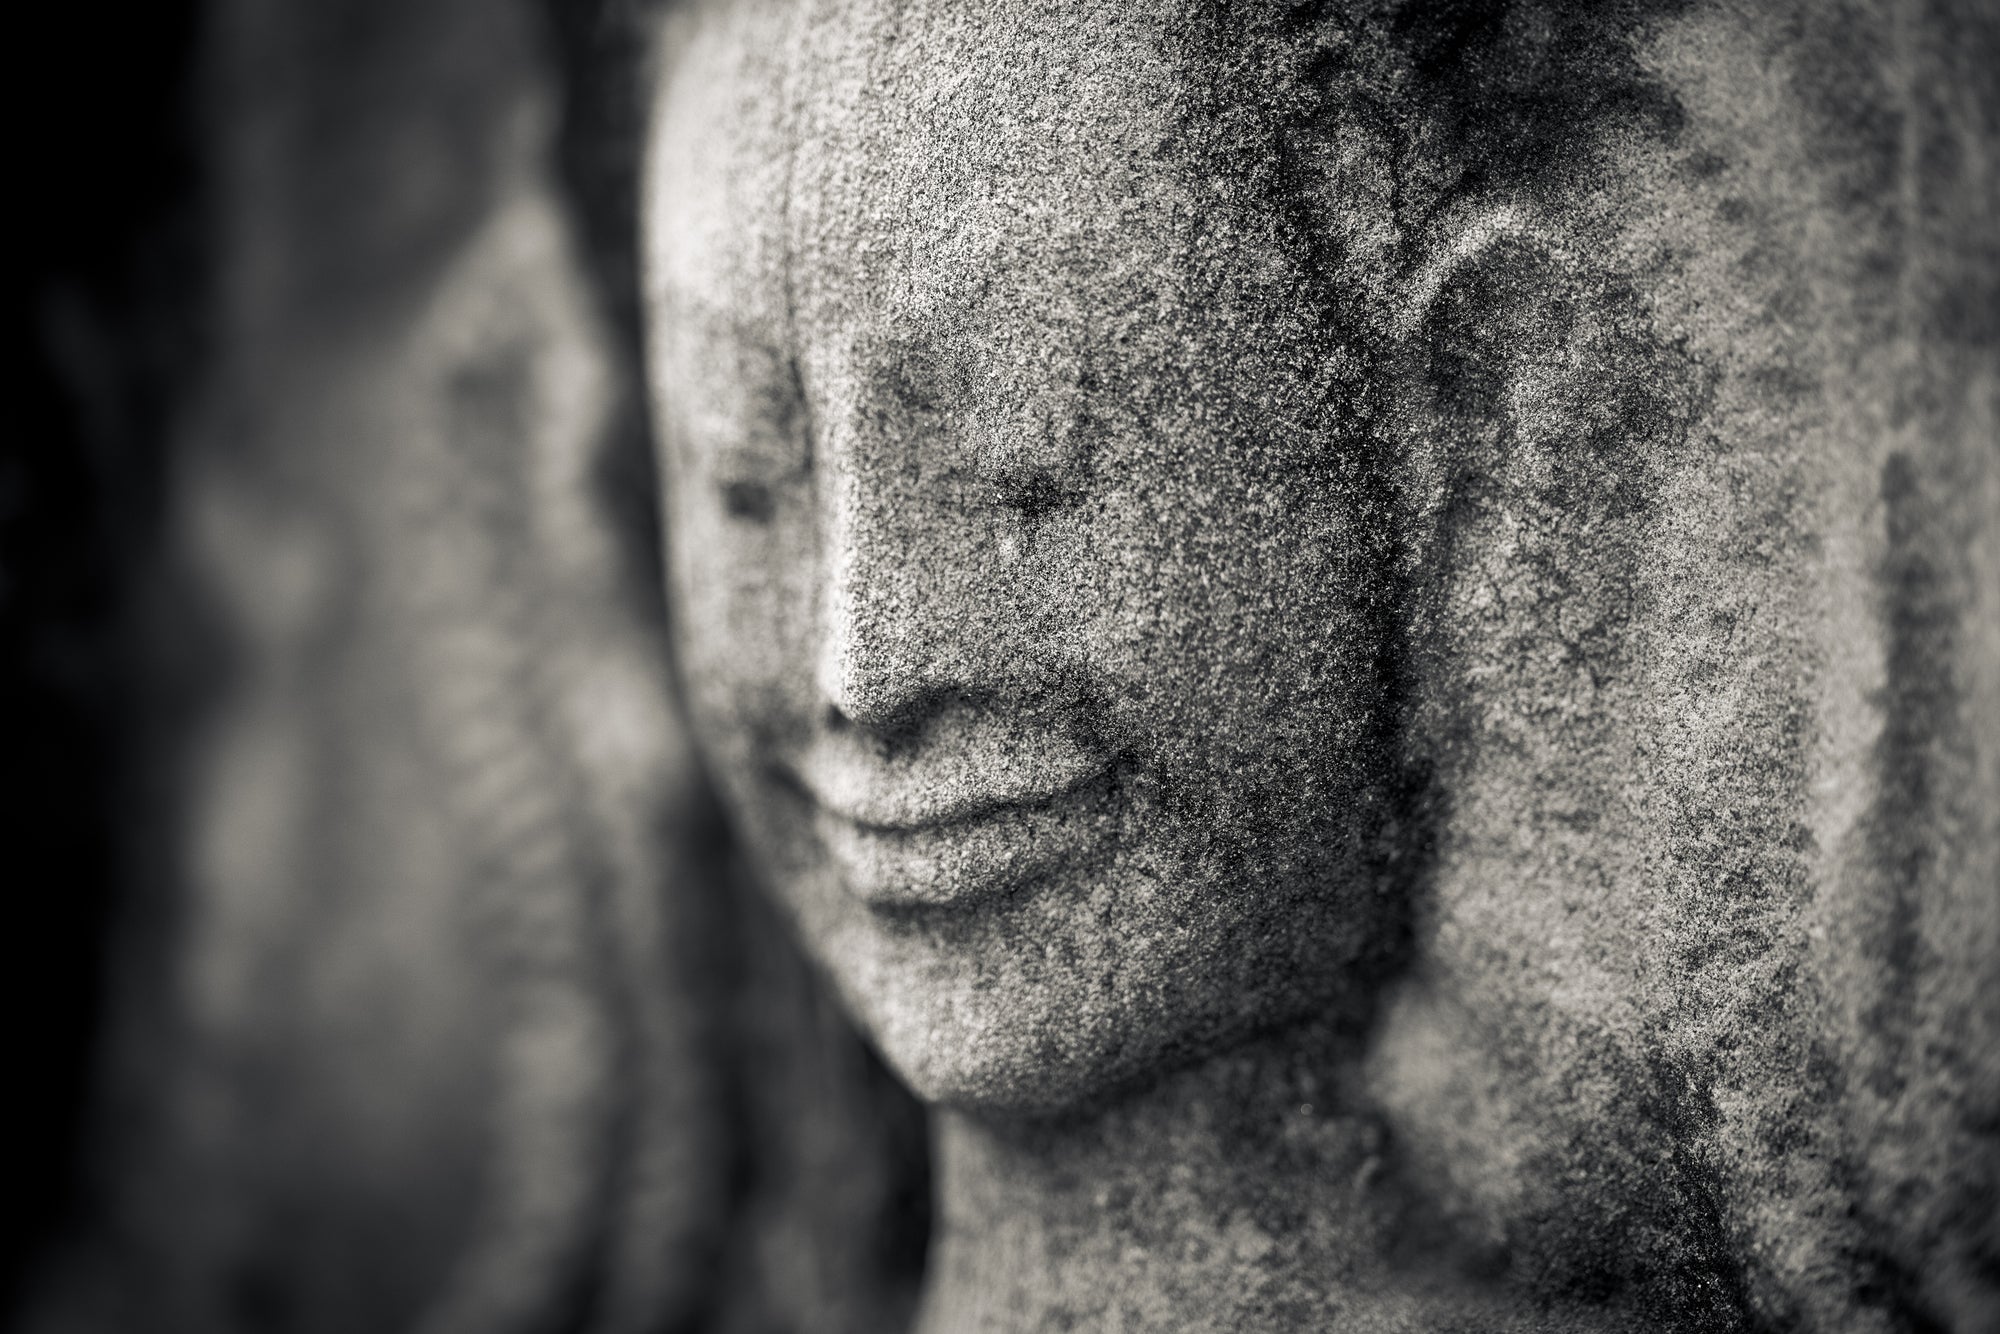 Smiling Apsara (Devata), Banteay Kdei Temple, Angkor, Cambodia